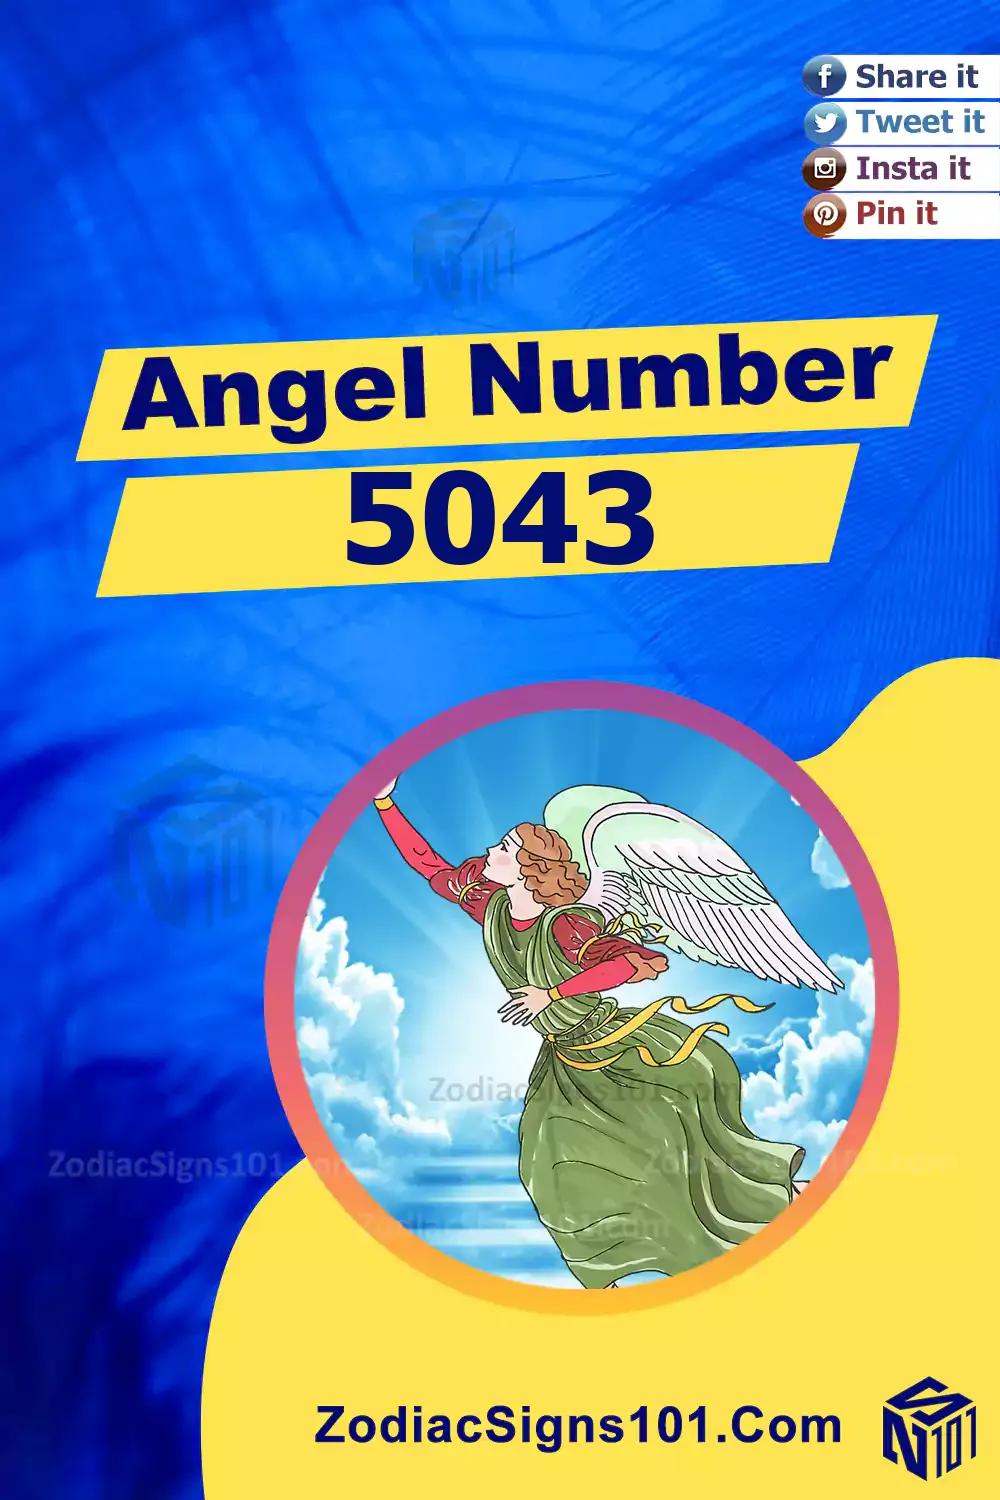 5043-Angel-Number-Meaning.jpg